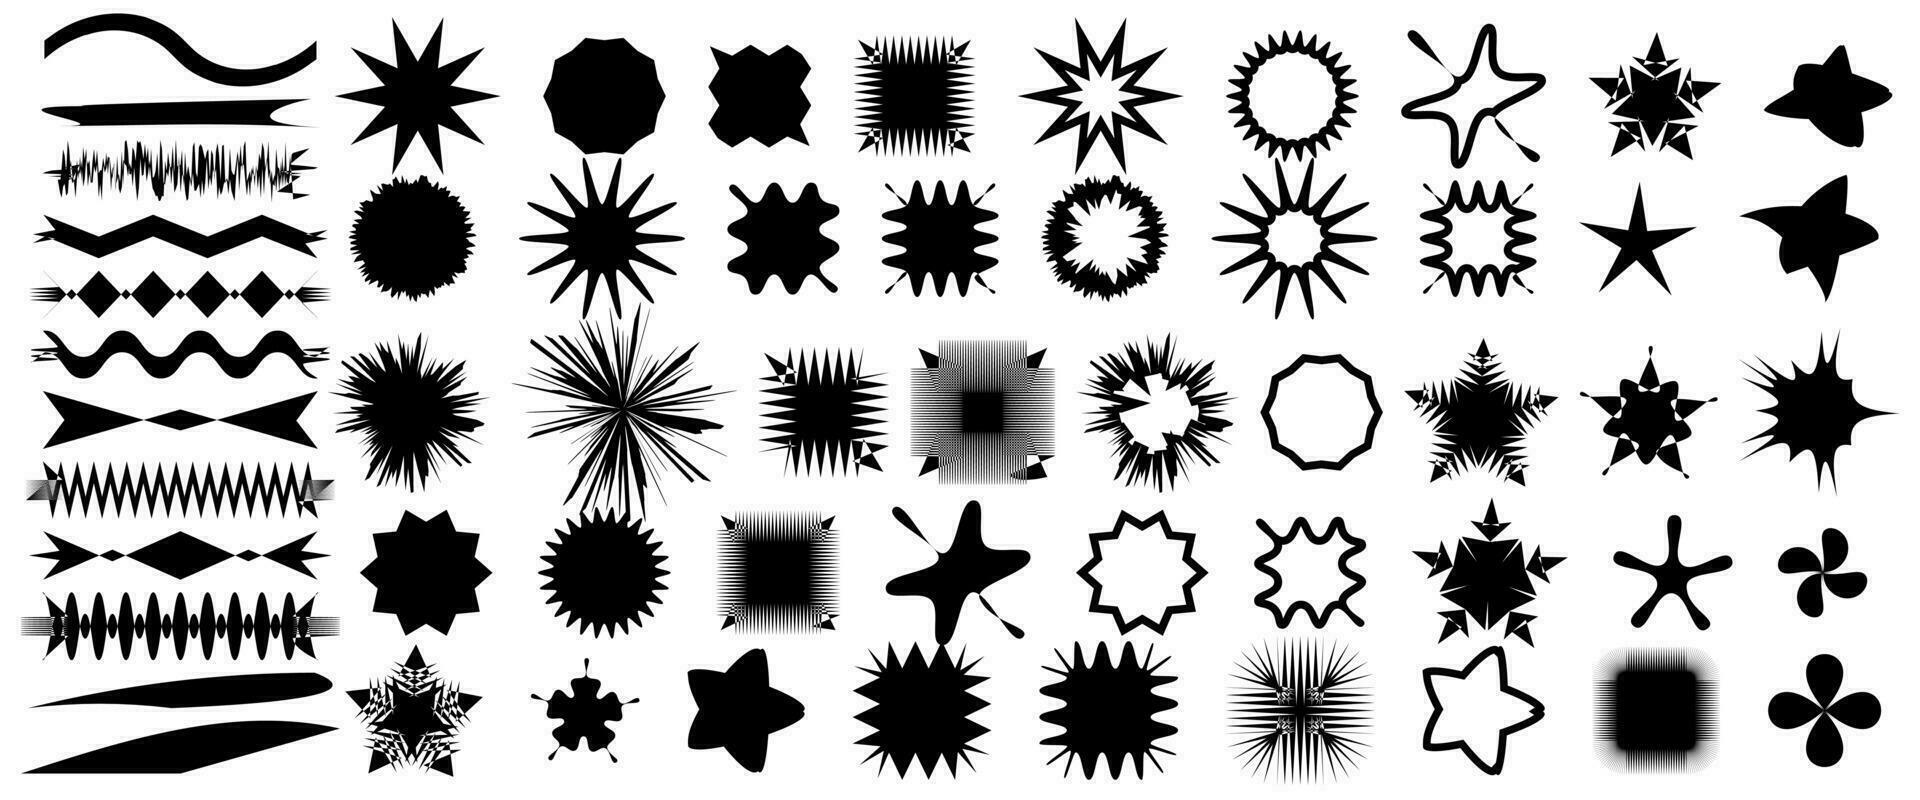 conjunto do abstrato estético ano 2000 geométrico elementos retro vetor formas